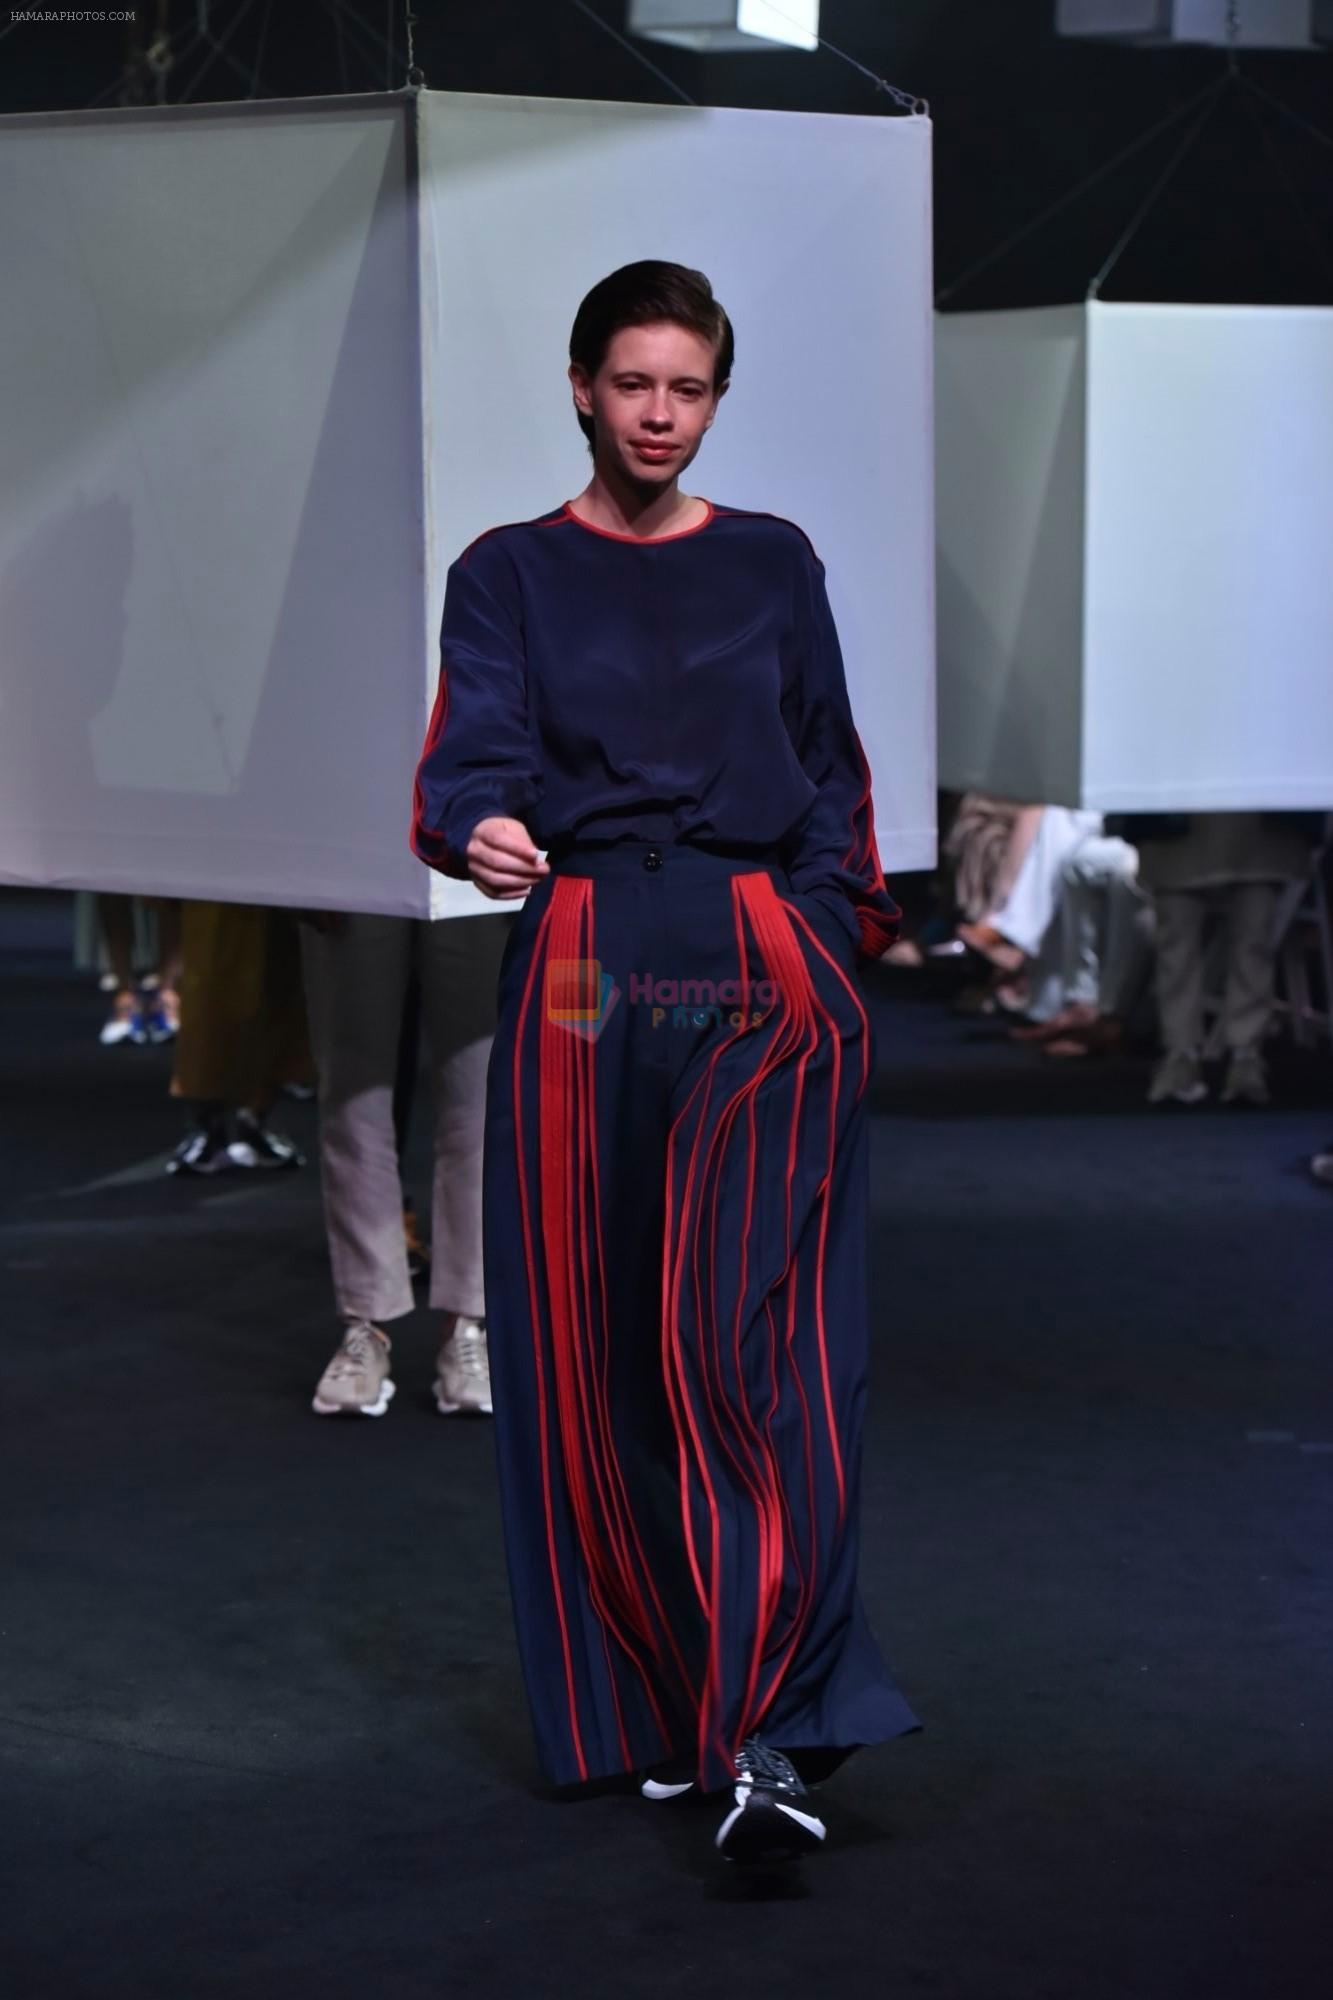 Kalki Koechlin Walks Ramp for Designer Bodice at Lakme Fashion Week 2019 on 3rd Feb 2019